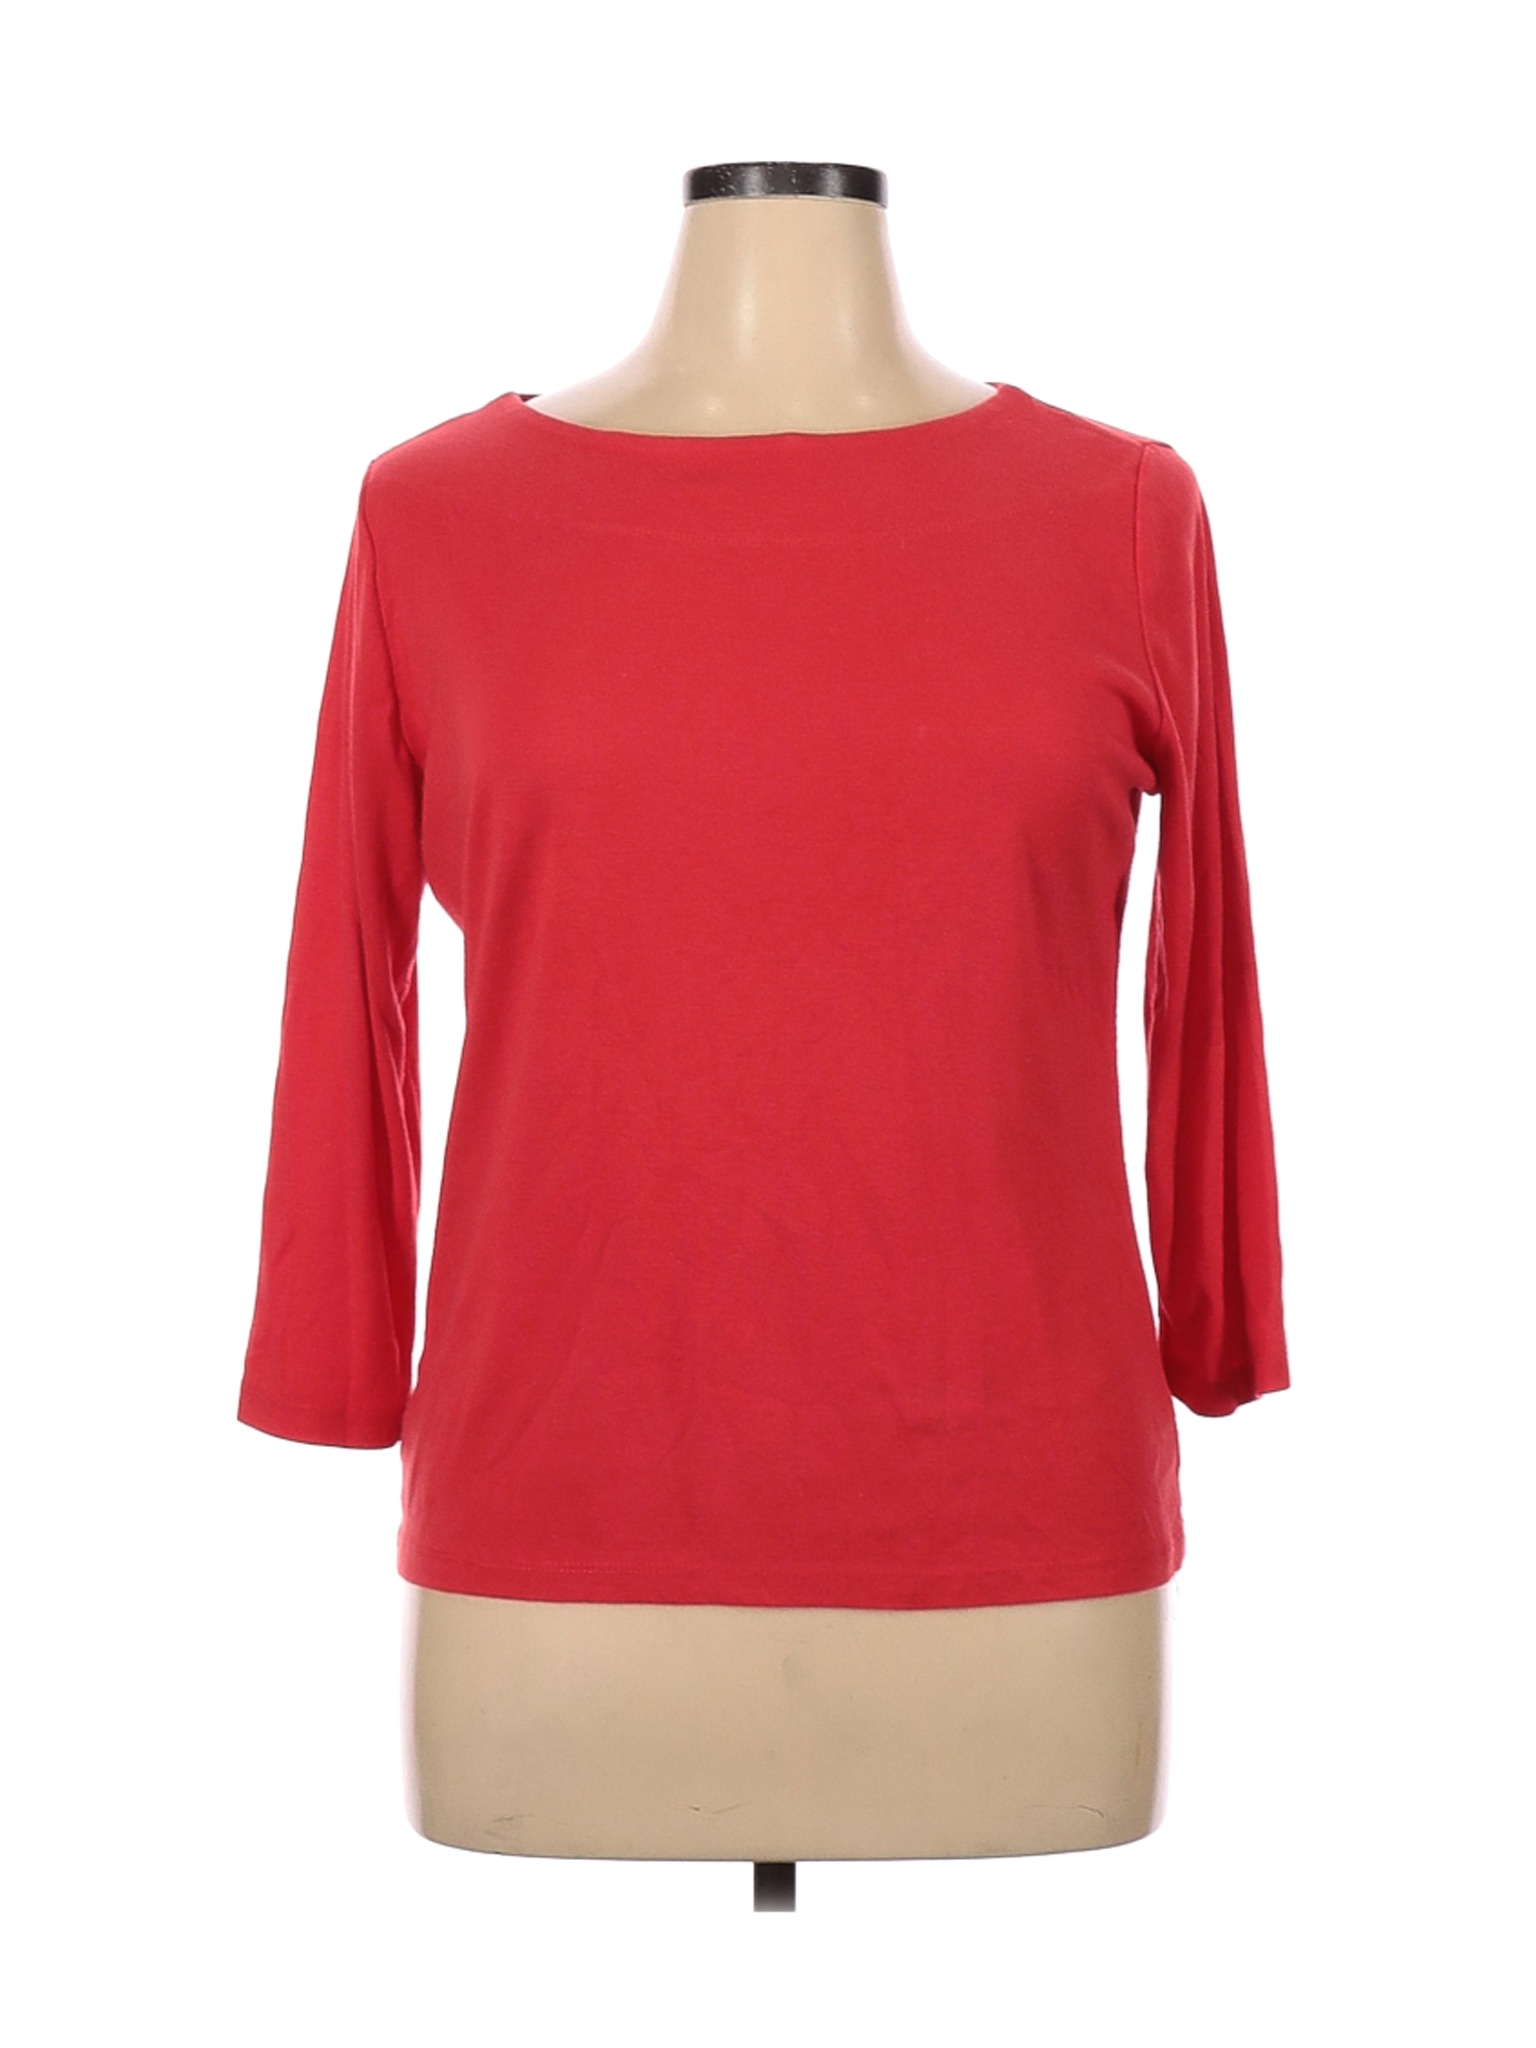 Suzanne Grae Women Red Long Sleeve T-Shirt XL | eBay